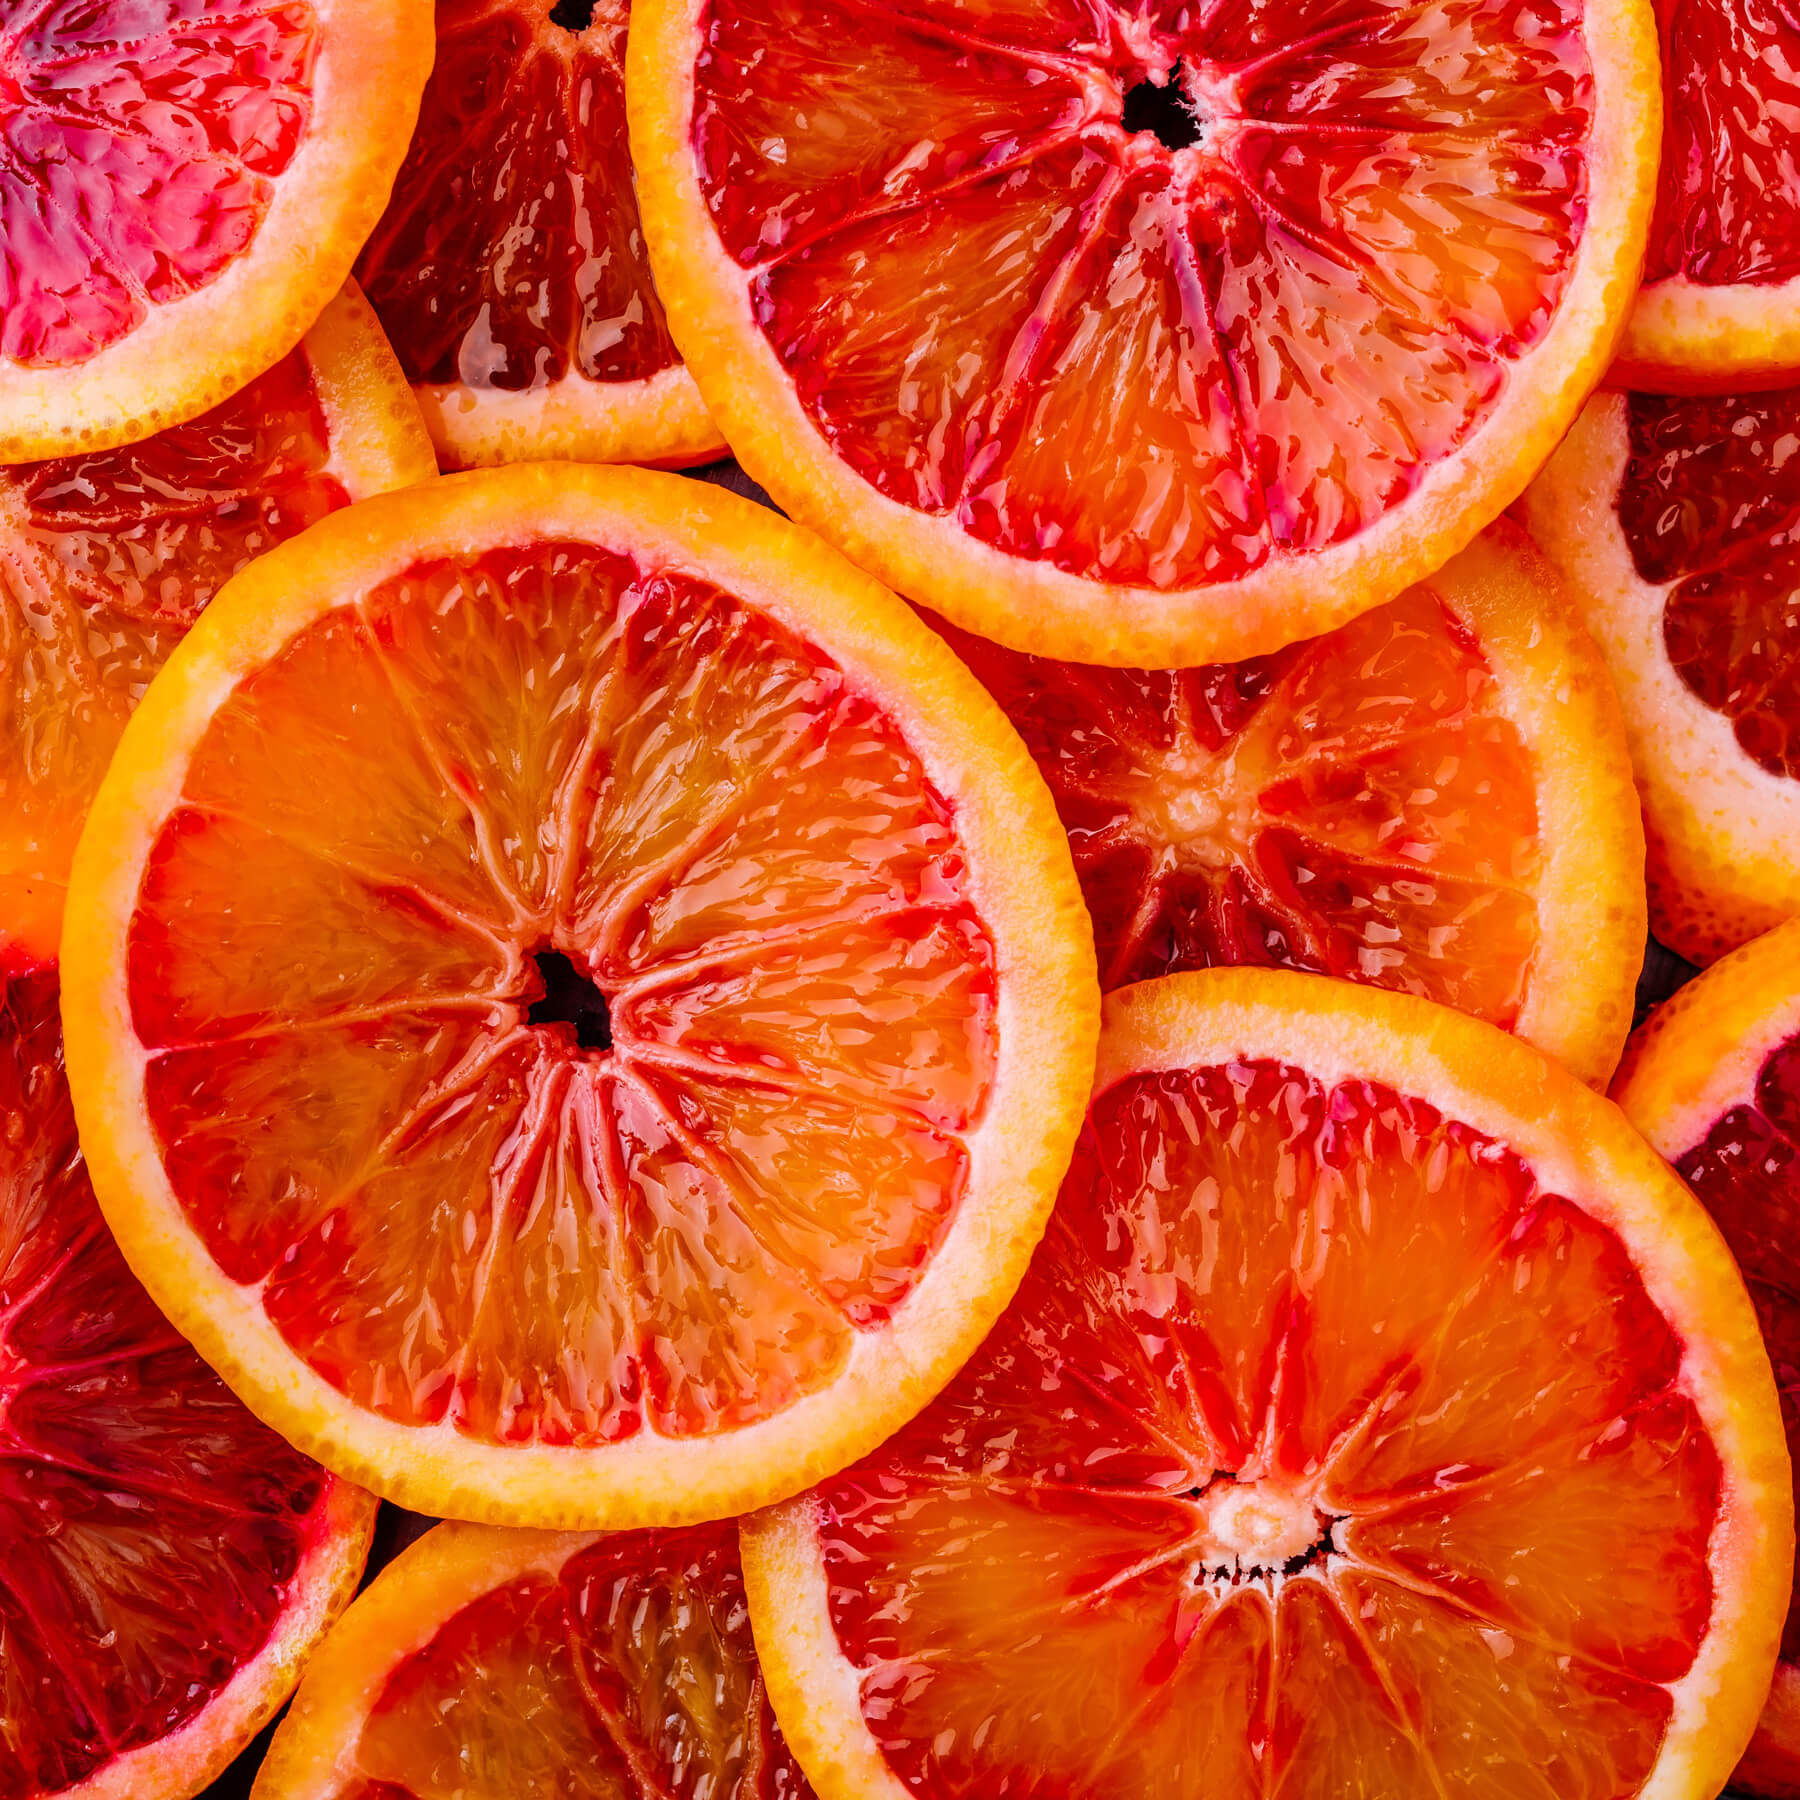 Fresh blood oranges are the base for the EFFEN blood orange flavored vodka.